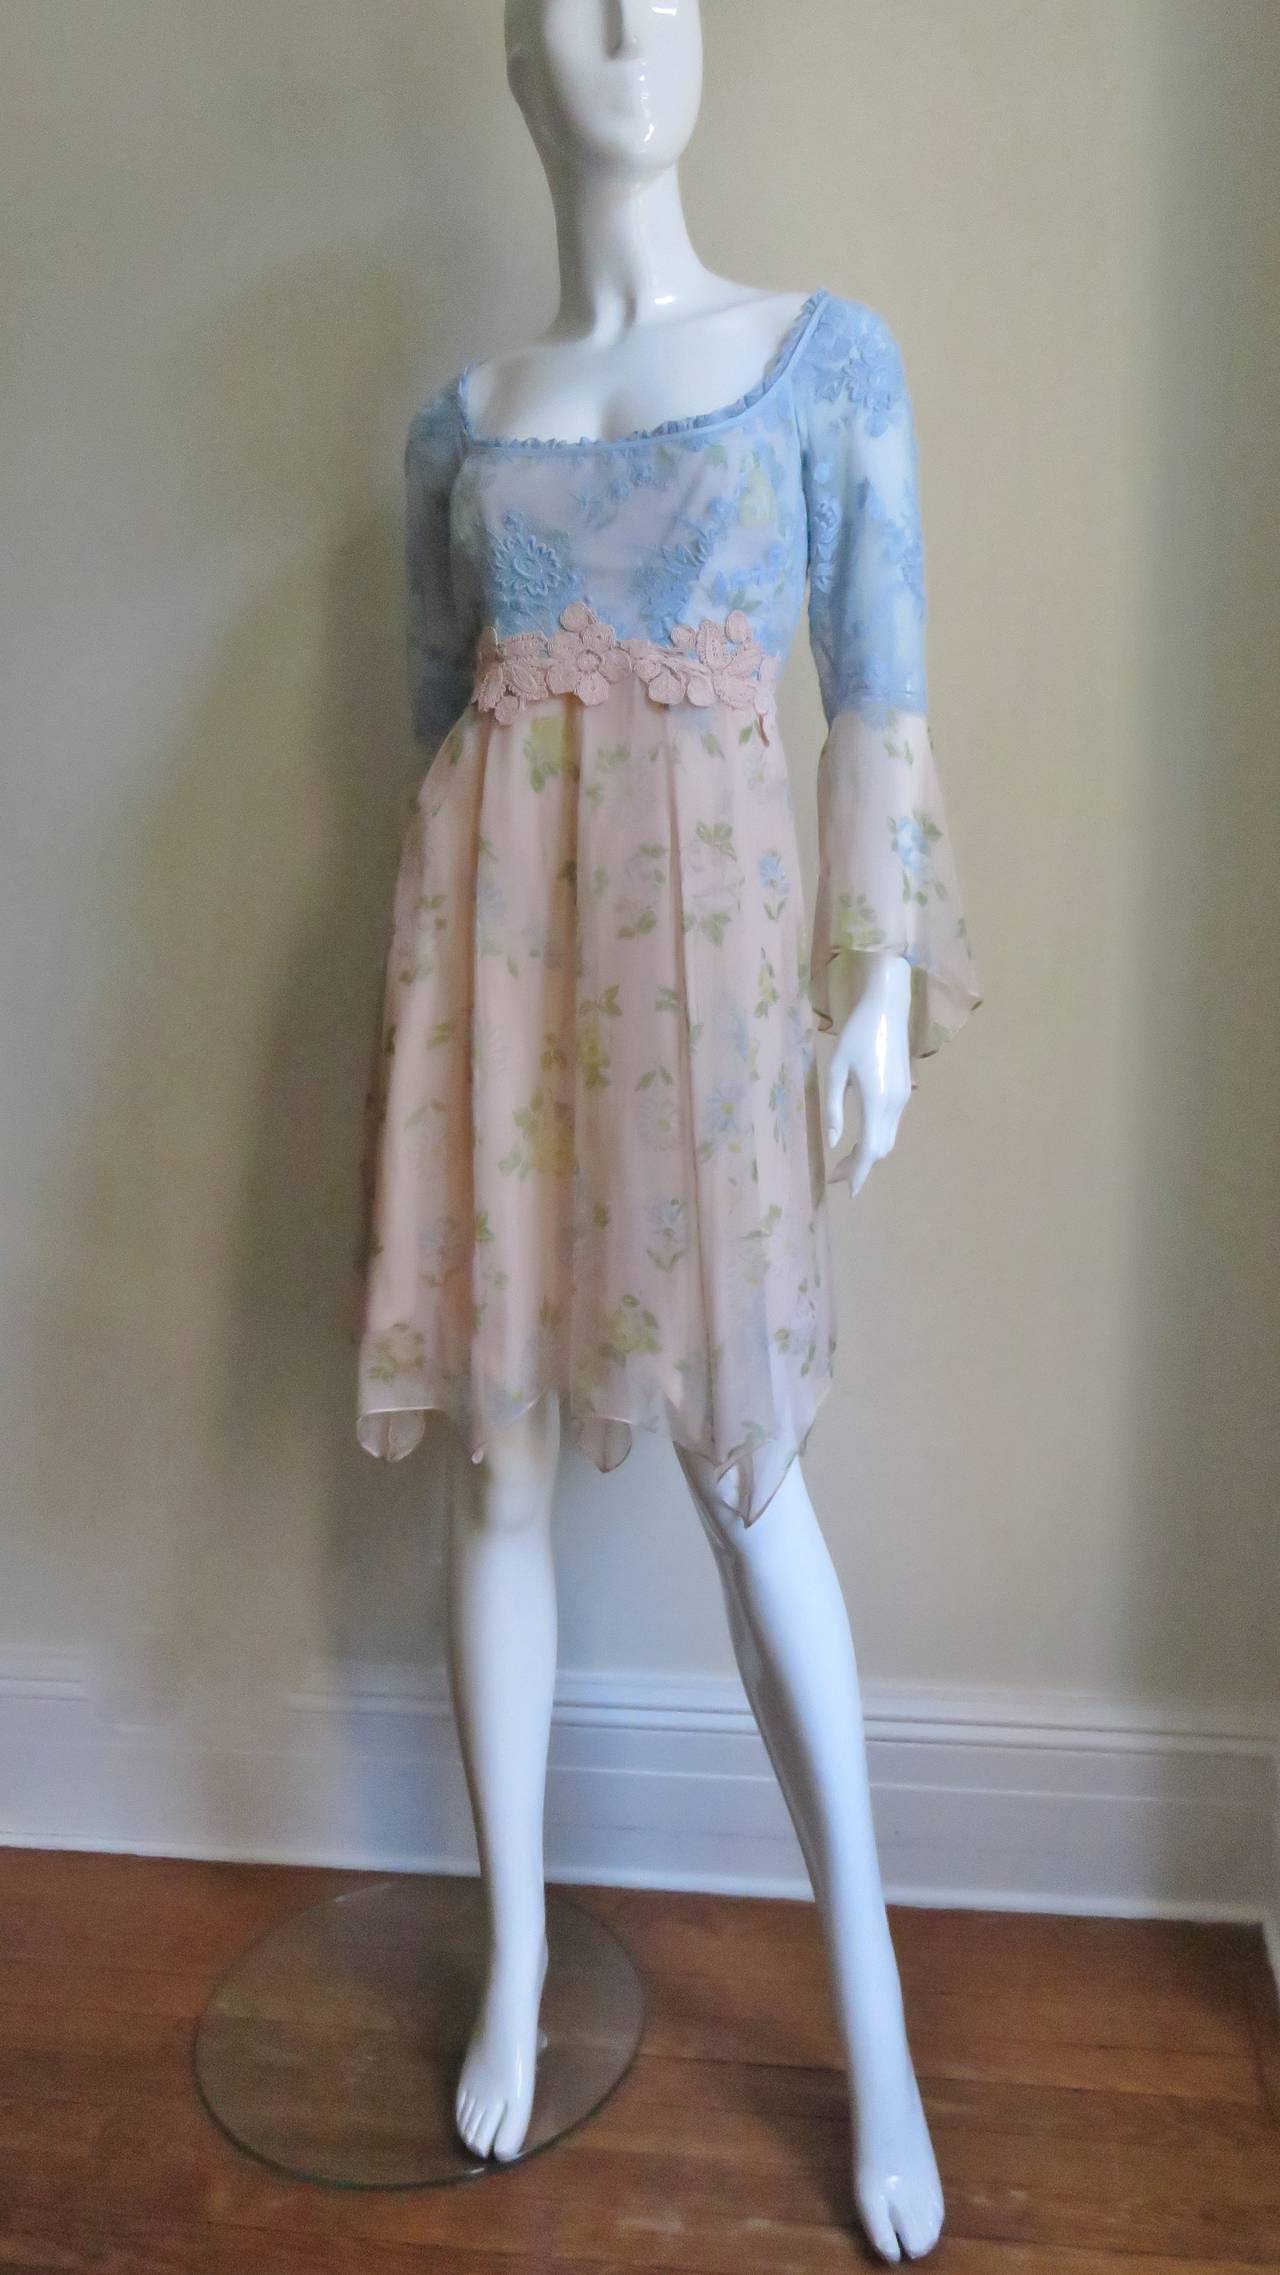 Lolita Lempicka Silk Dress with Lace 1